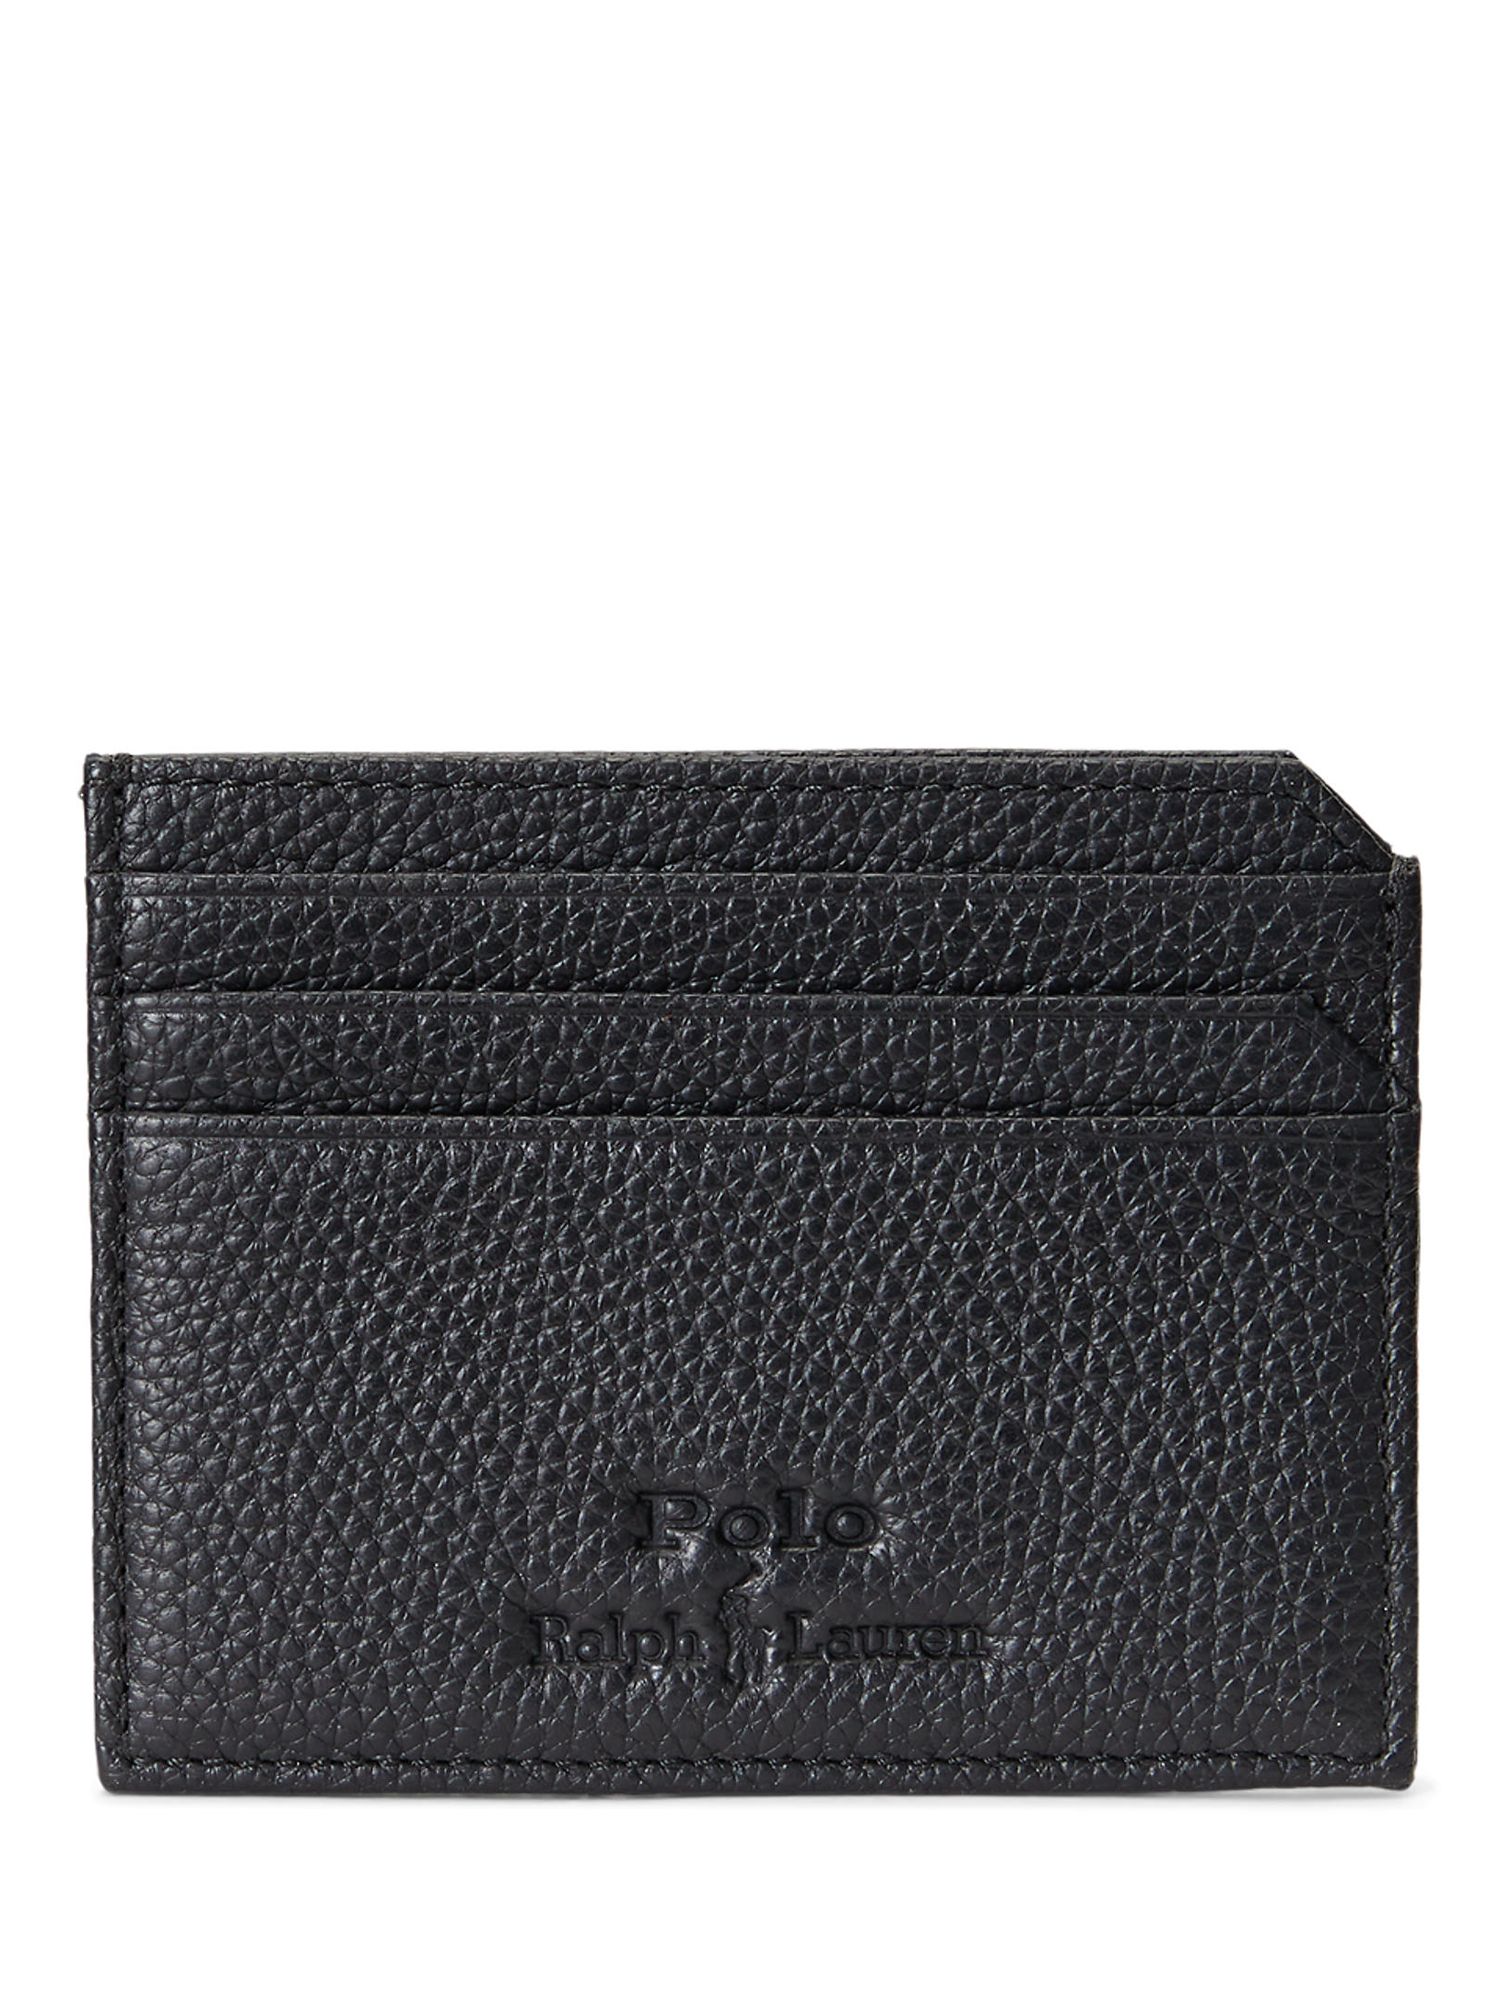 Buy Polo Ralph Lauren Pebbled Leather Card Holder, Black Online at johnlewis.com